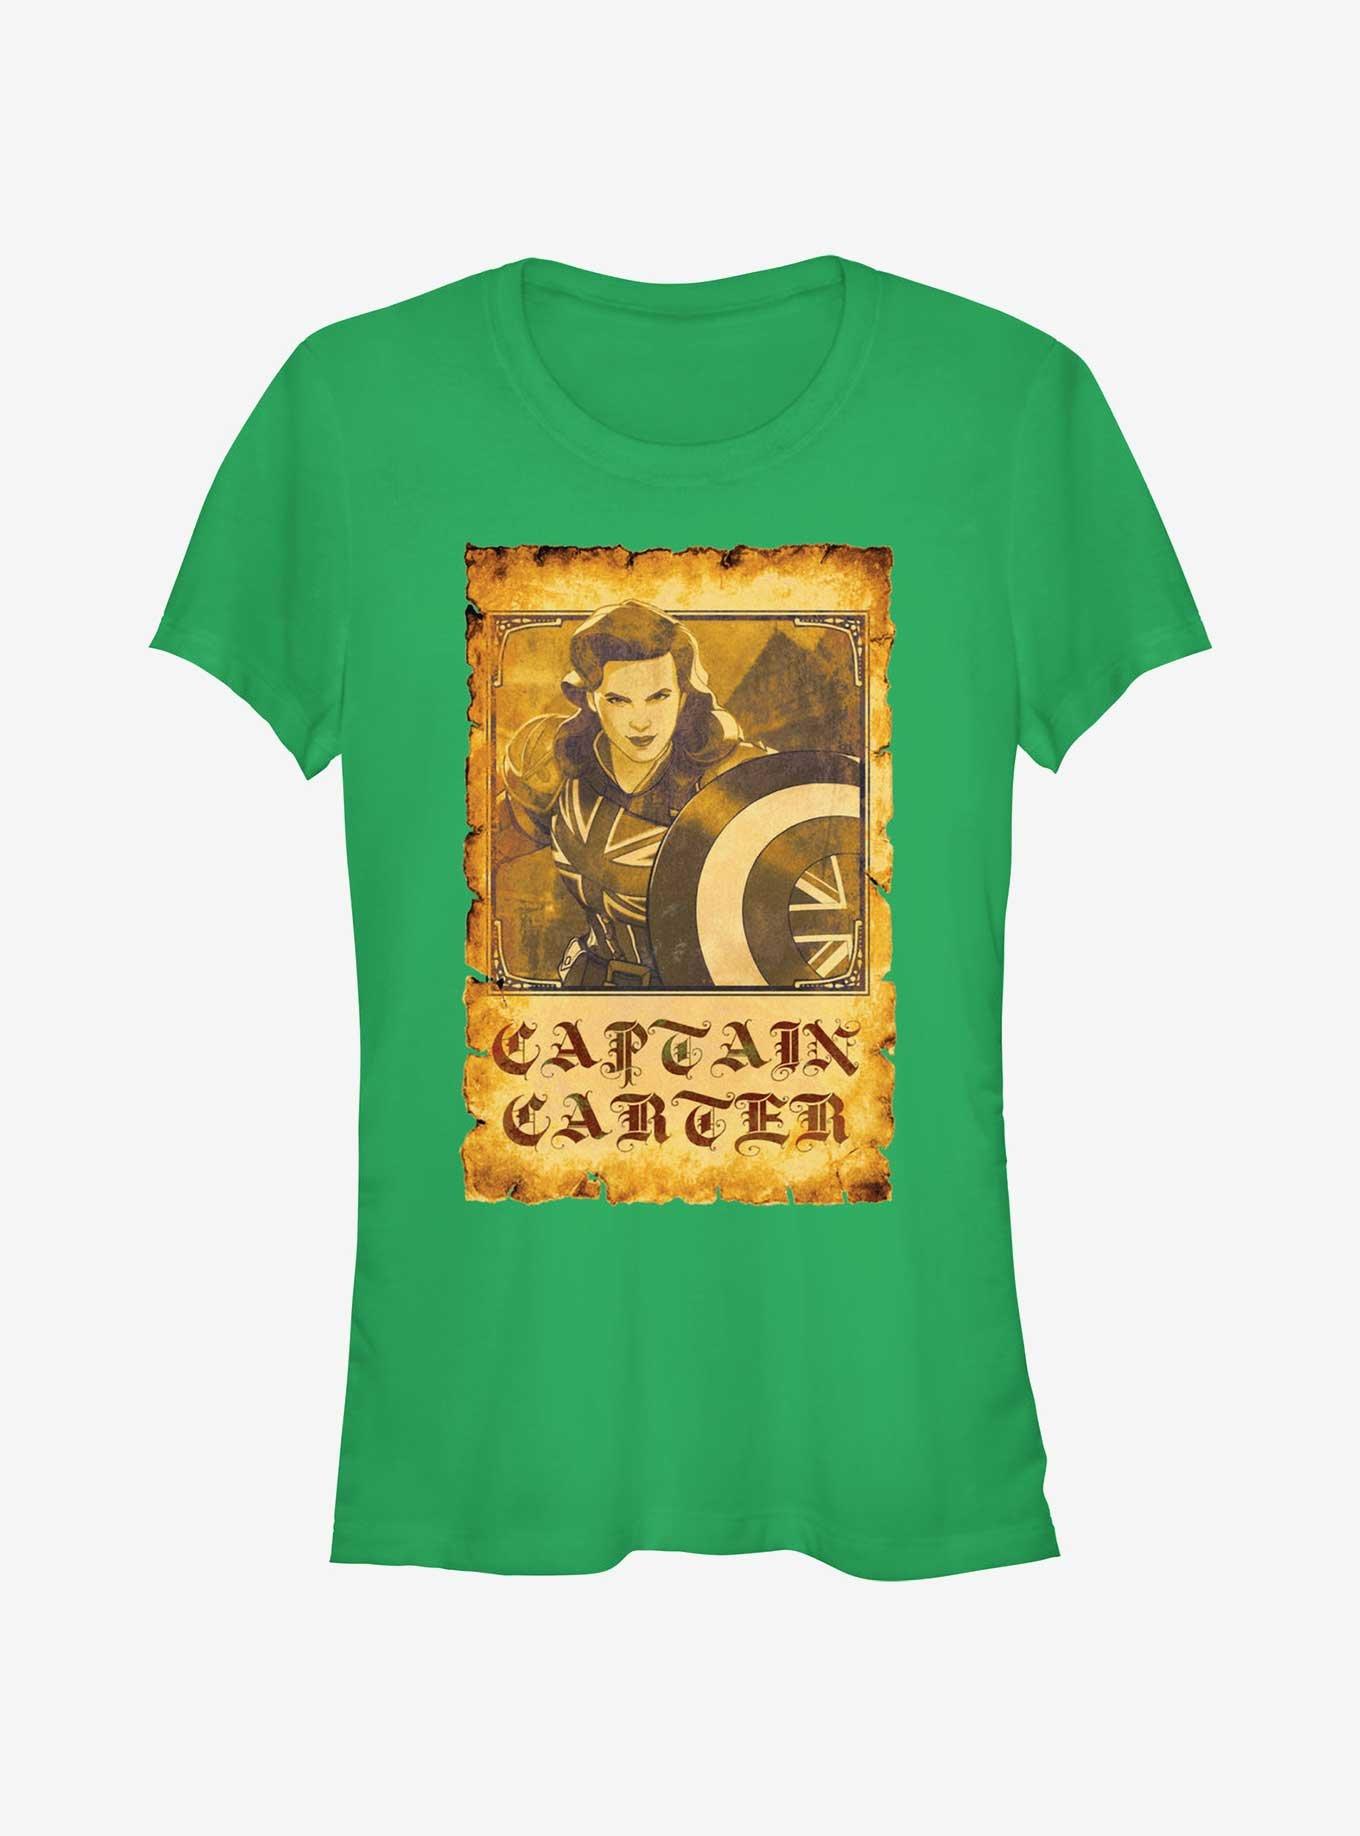 Marvel What If...? Captain Carter Poster Girls T-Shirt